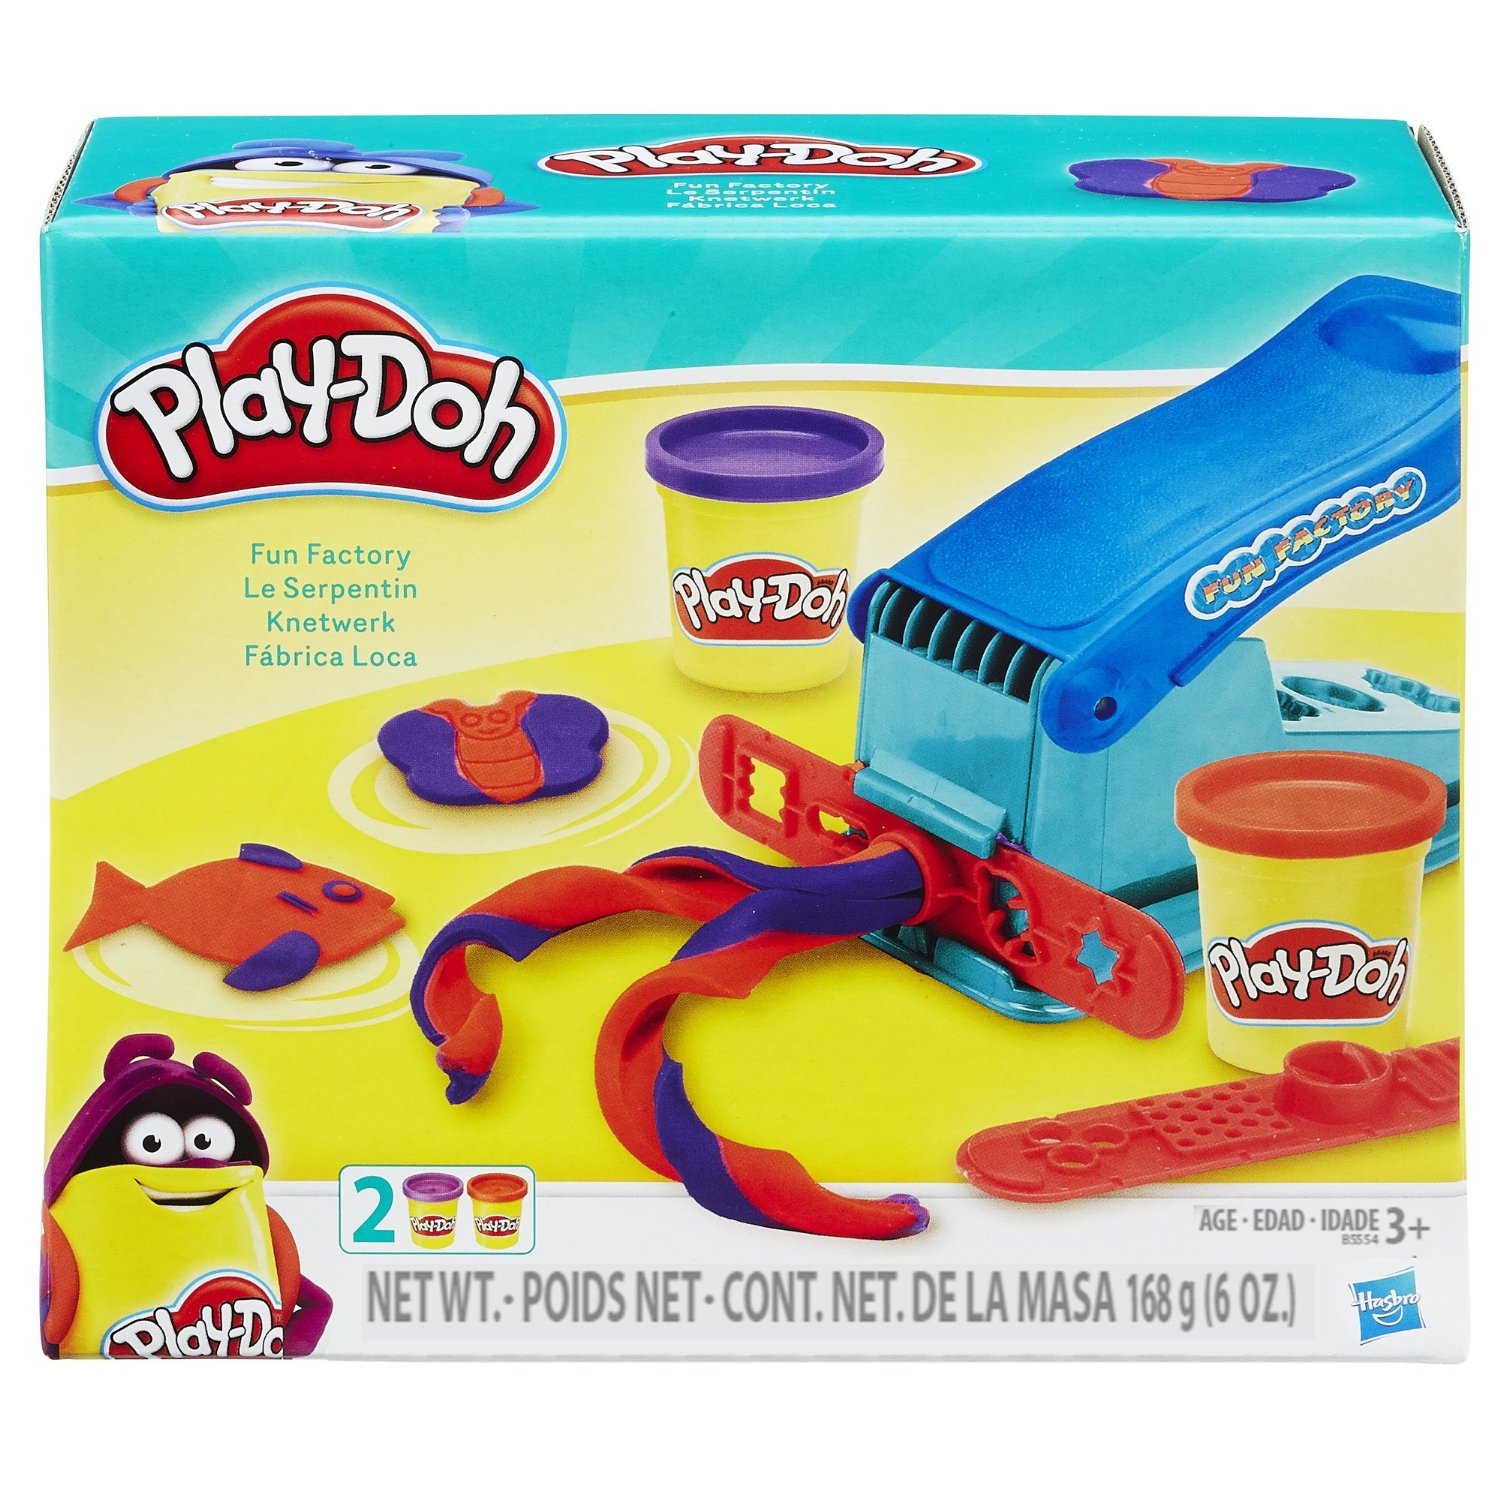 Play-Doh Fun Factory Set – Just $5.89!